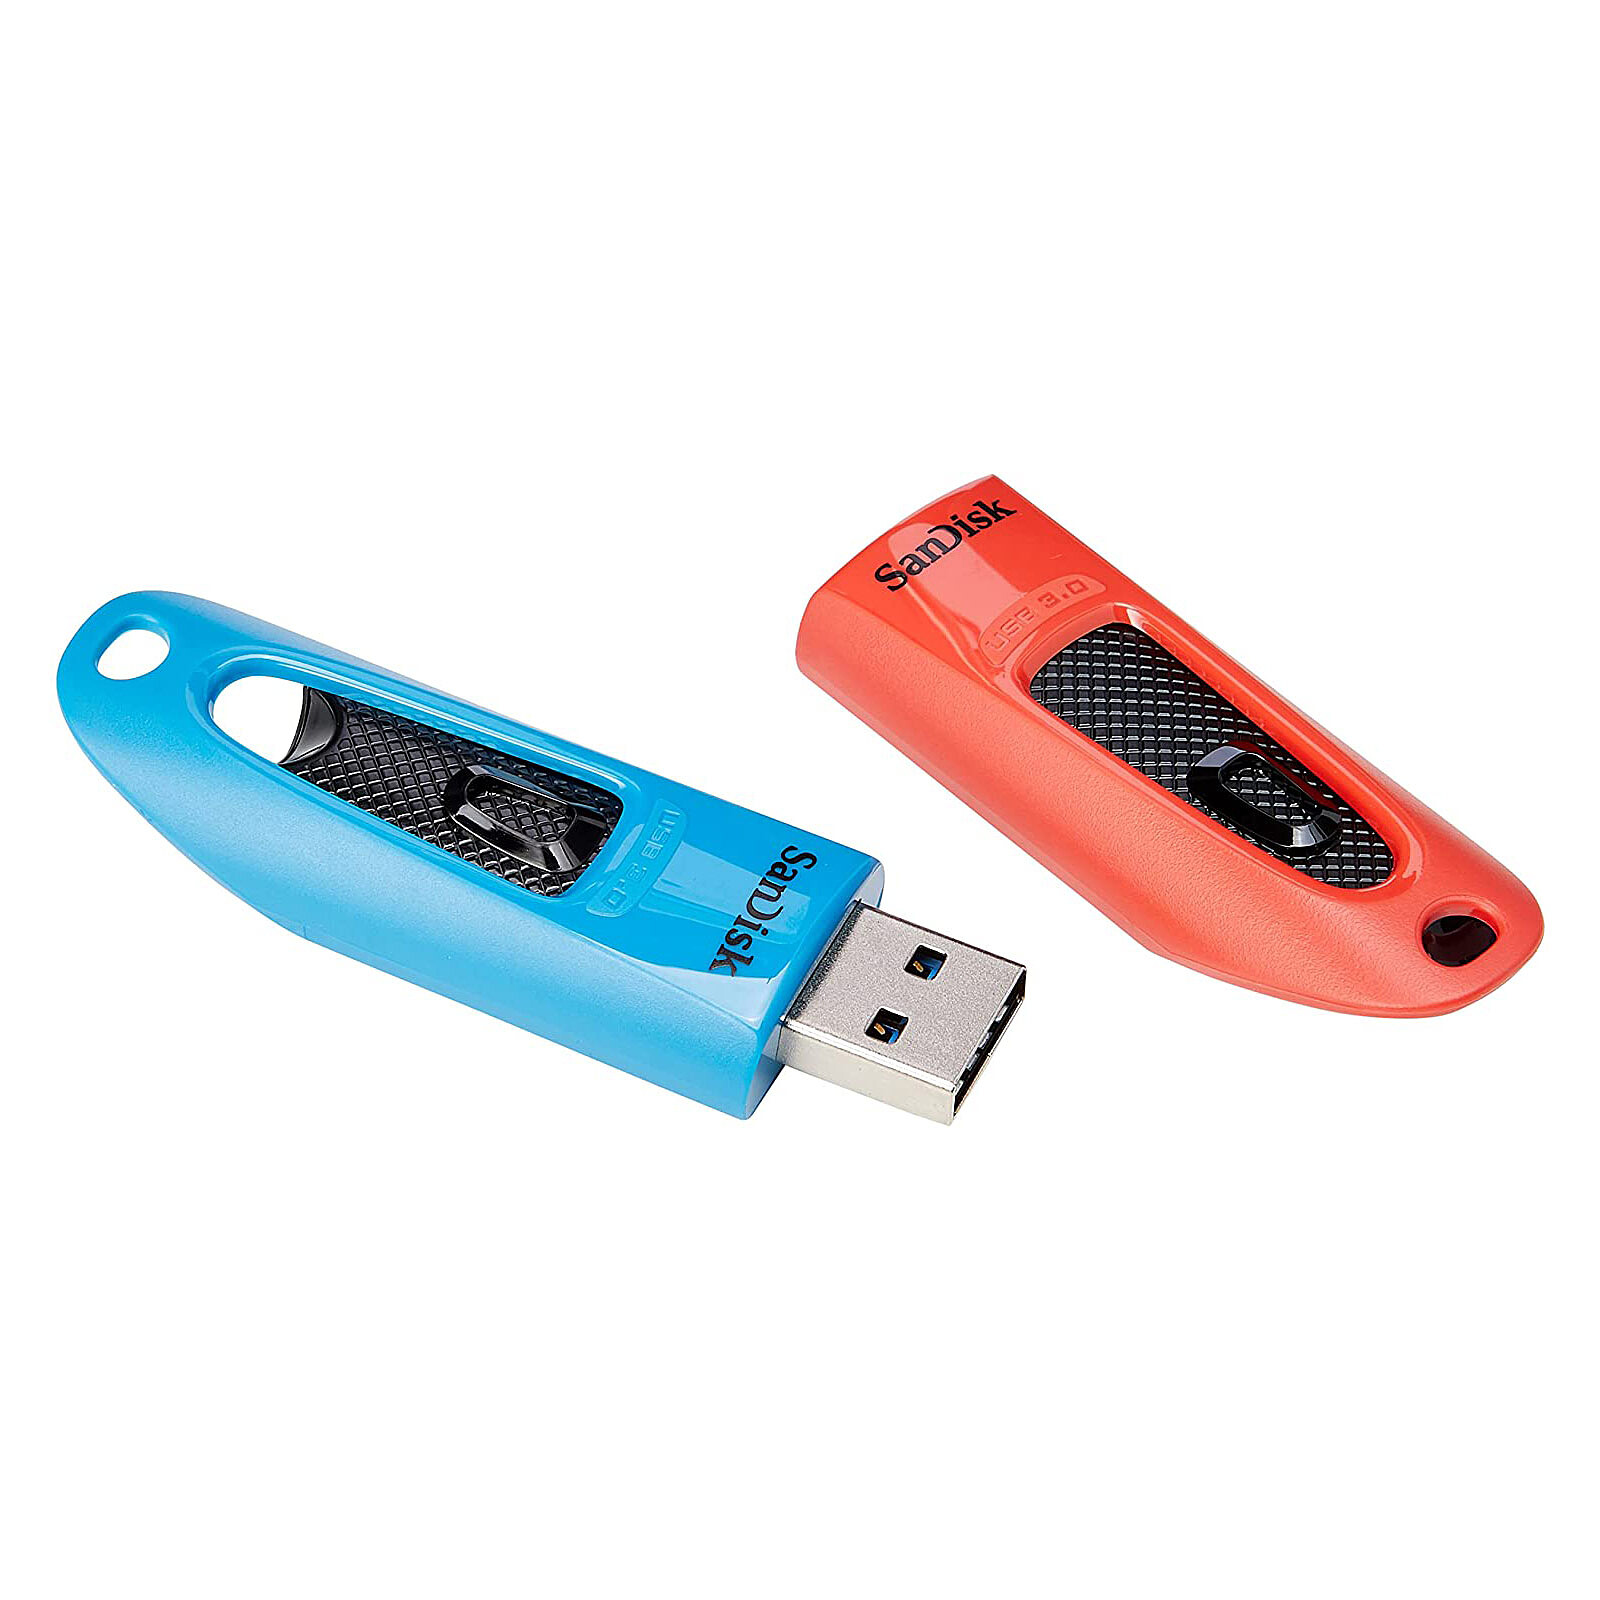 SanDisk Ultra USB 3.0 64GB Blue/Red (2-Pack) - USB flash drive - LDLC  3-year warranty